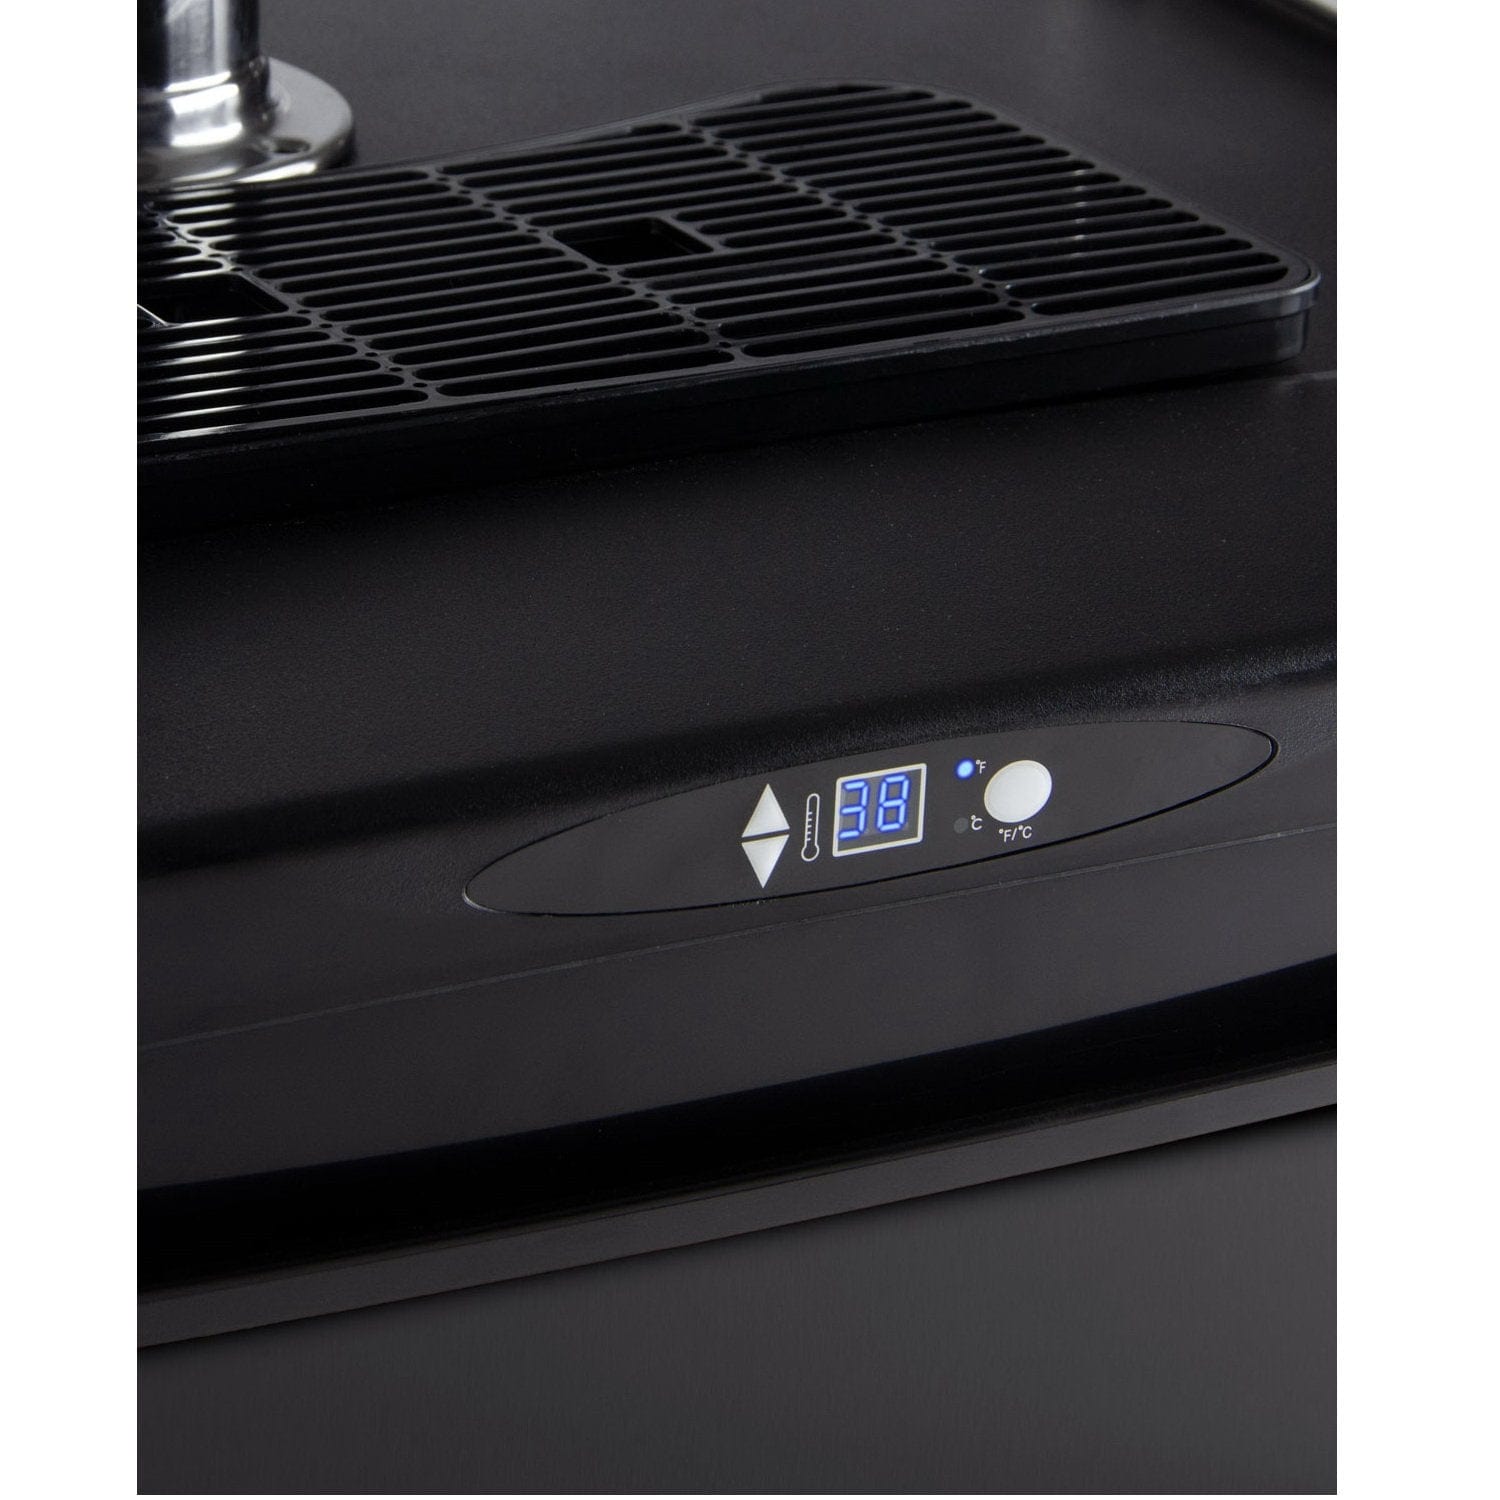 Kegco Full Size Commercial Grade Digital Kombucha Dispenser - Black Cabinet with Black Door